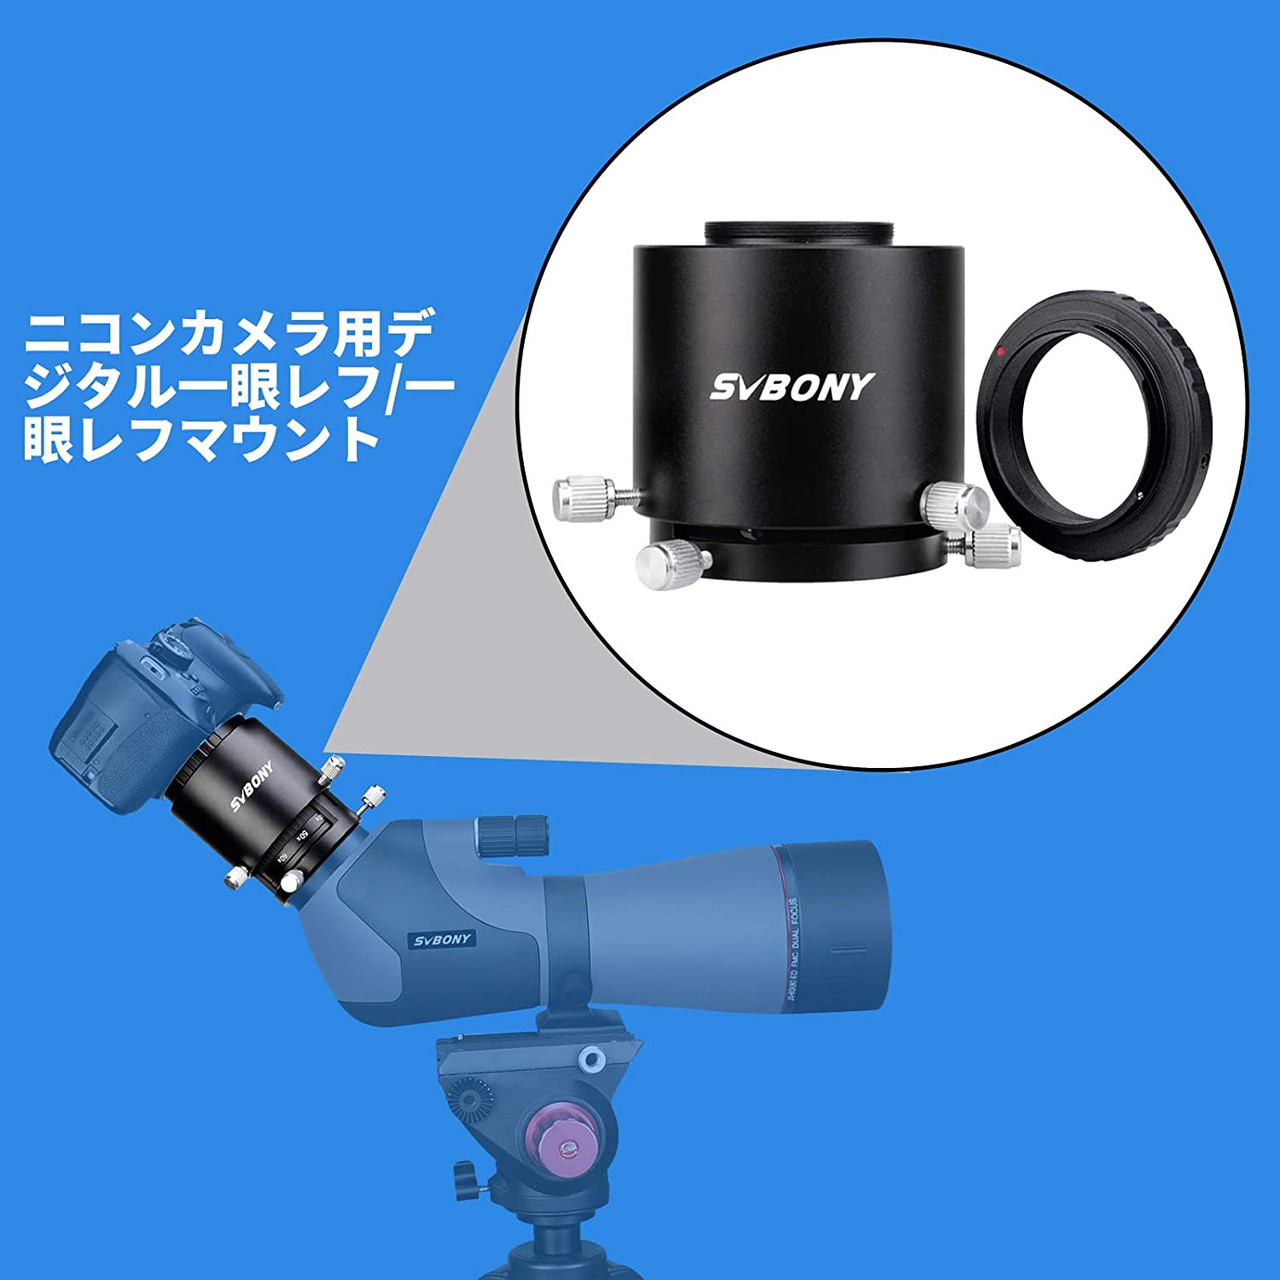 SVBONY SV46P Fieldscope Spotting Scope Telescope High Magnification 20-60x80mm Dual Focus ED Glass FMC IPX7 Waterproof with Nikon T Ring Glasses Compatible 